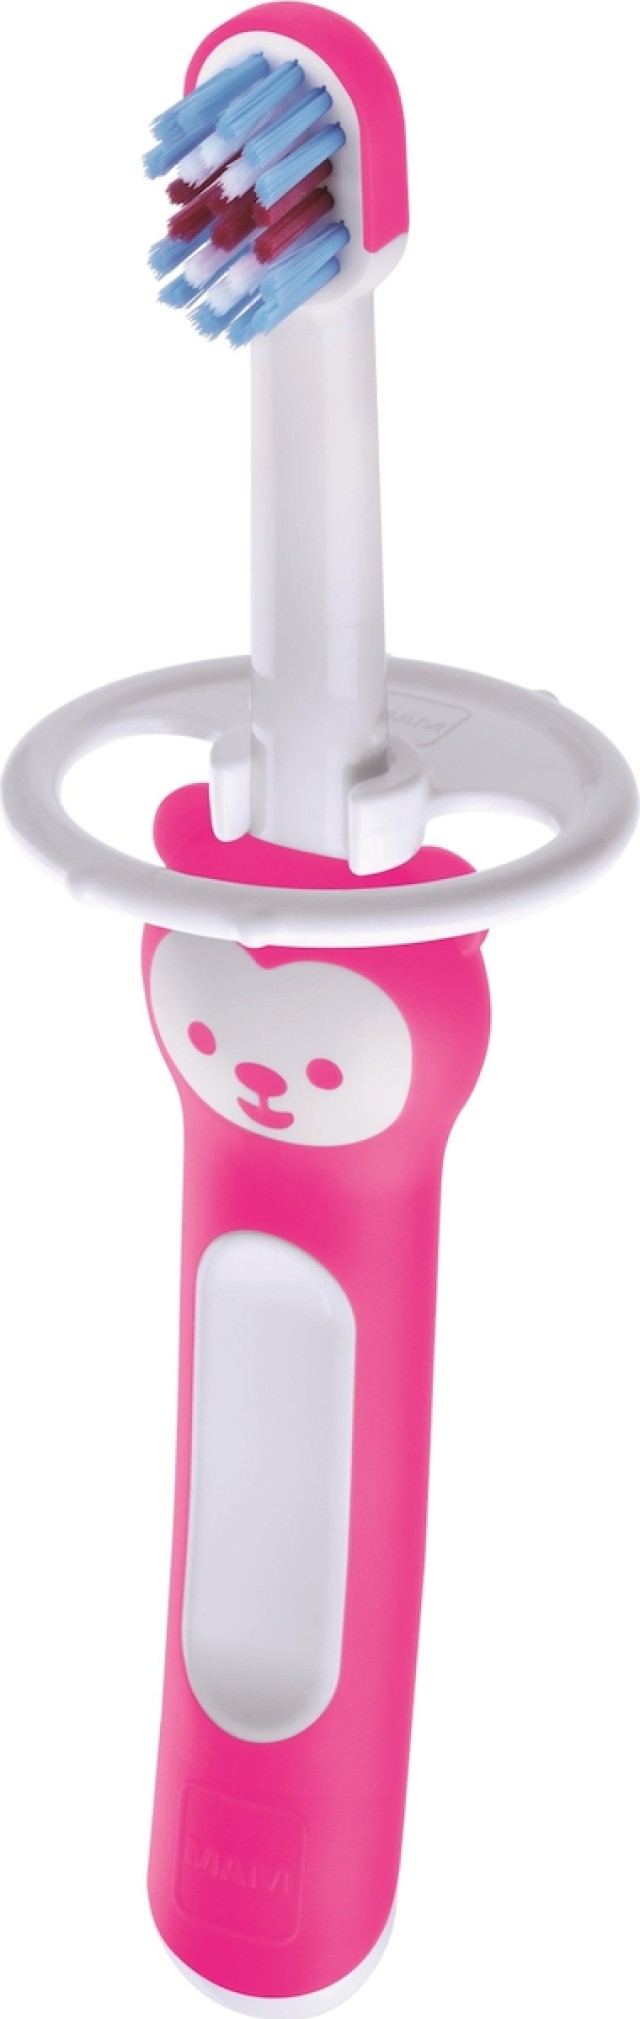 Mam Babys Brush Βρεφική Οδοντόβουρτσα με Λαβή Αρκουδάκι για 6m+ Χρώμα:Ροζ 1 Τεμάχιο [606]